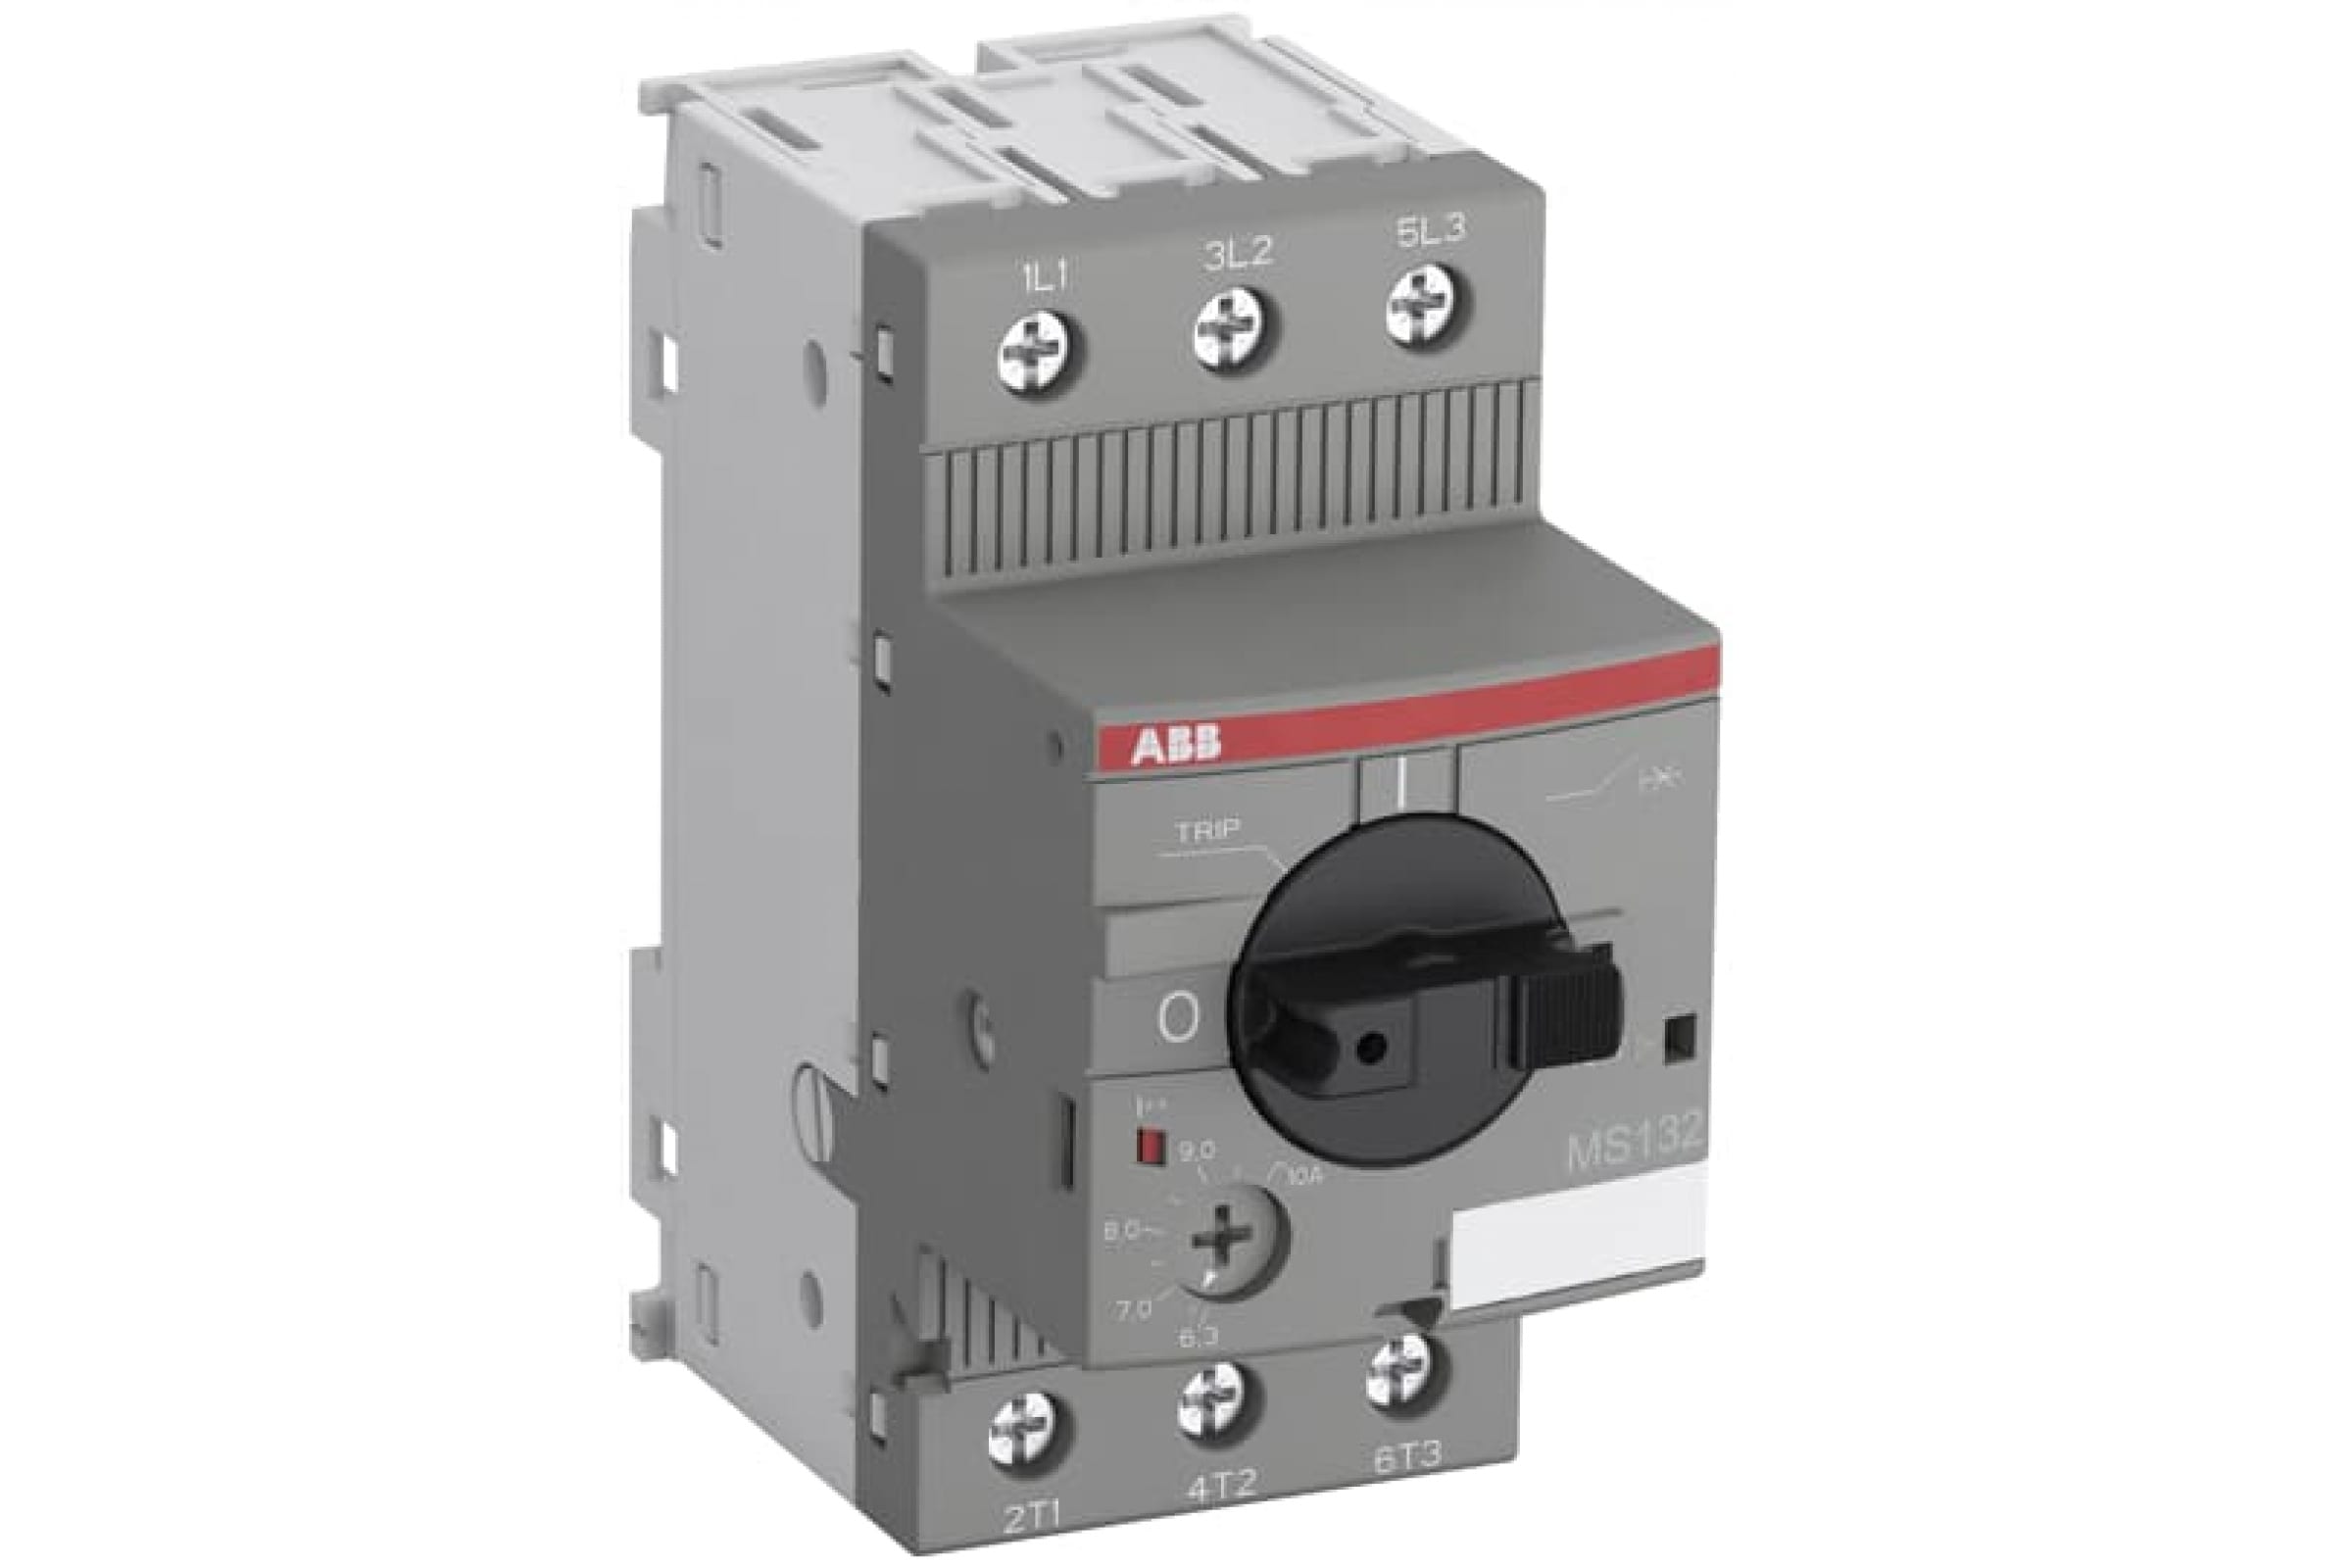 ABB MS132-10 100кА Автоматический выключатель с регулир.тепл.защитой 6.3A-10А,класс тепл.р